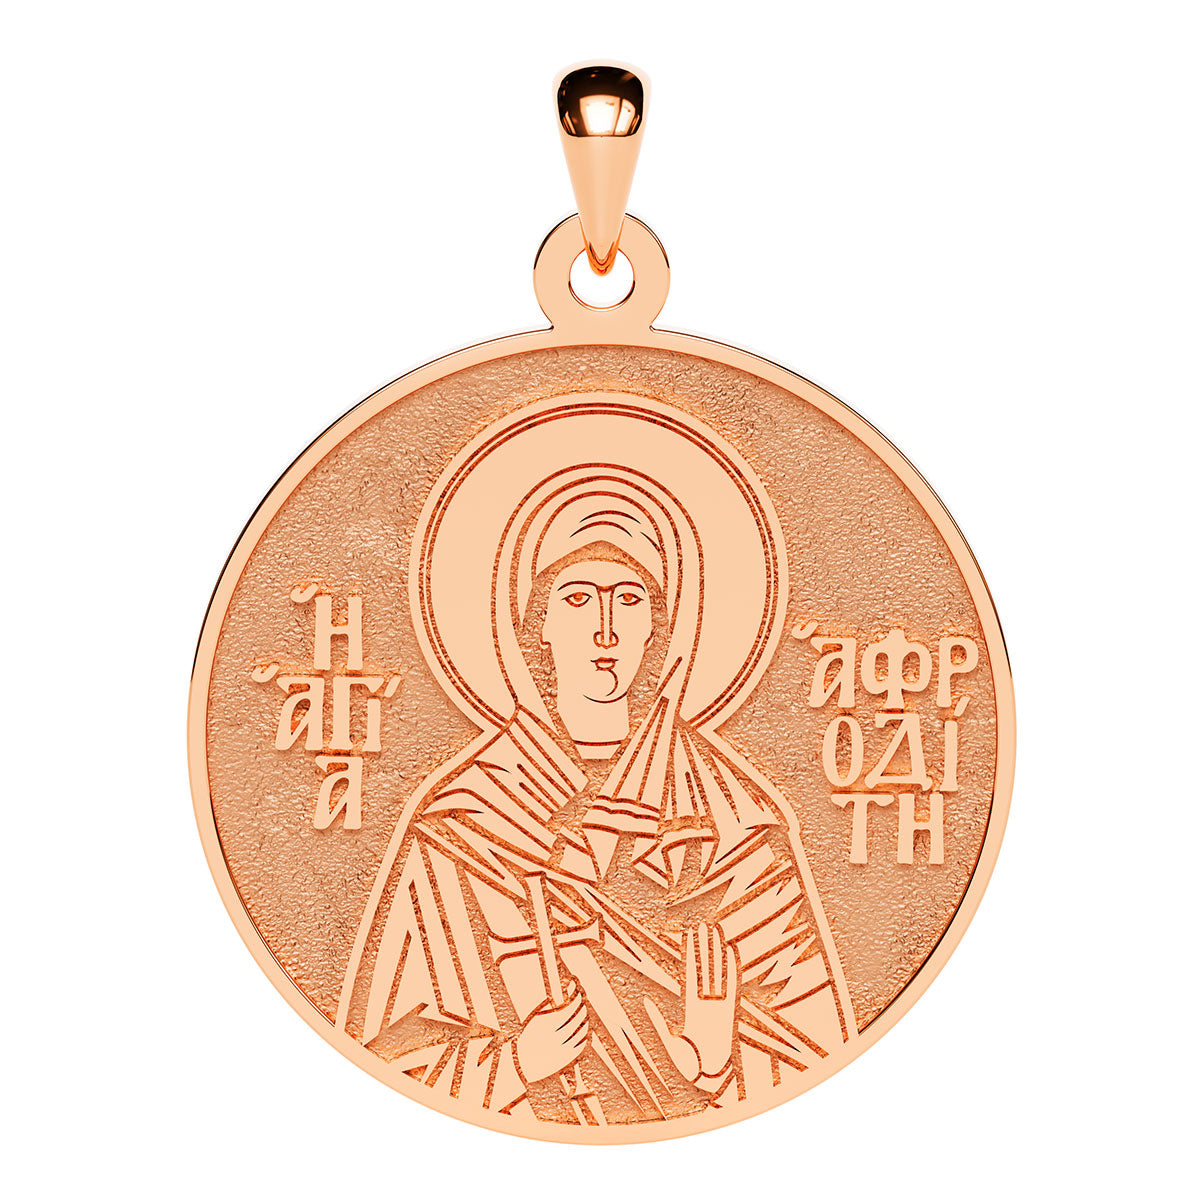 Saint Aphrodite Greek Orthodox Icon Round Medal